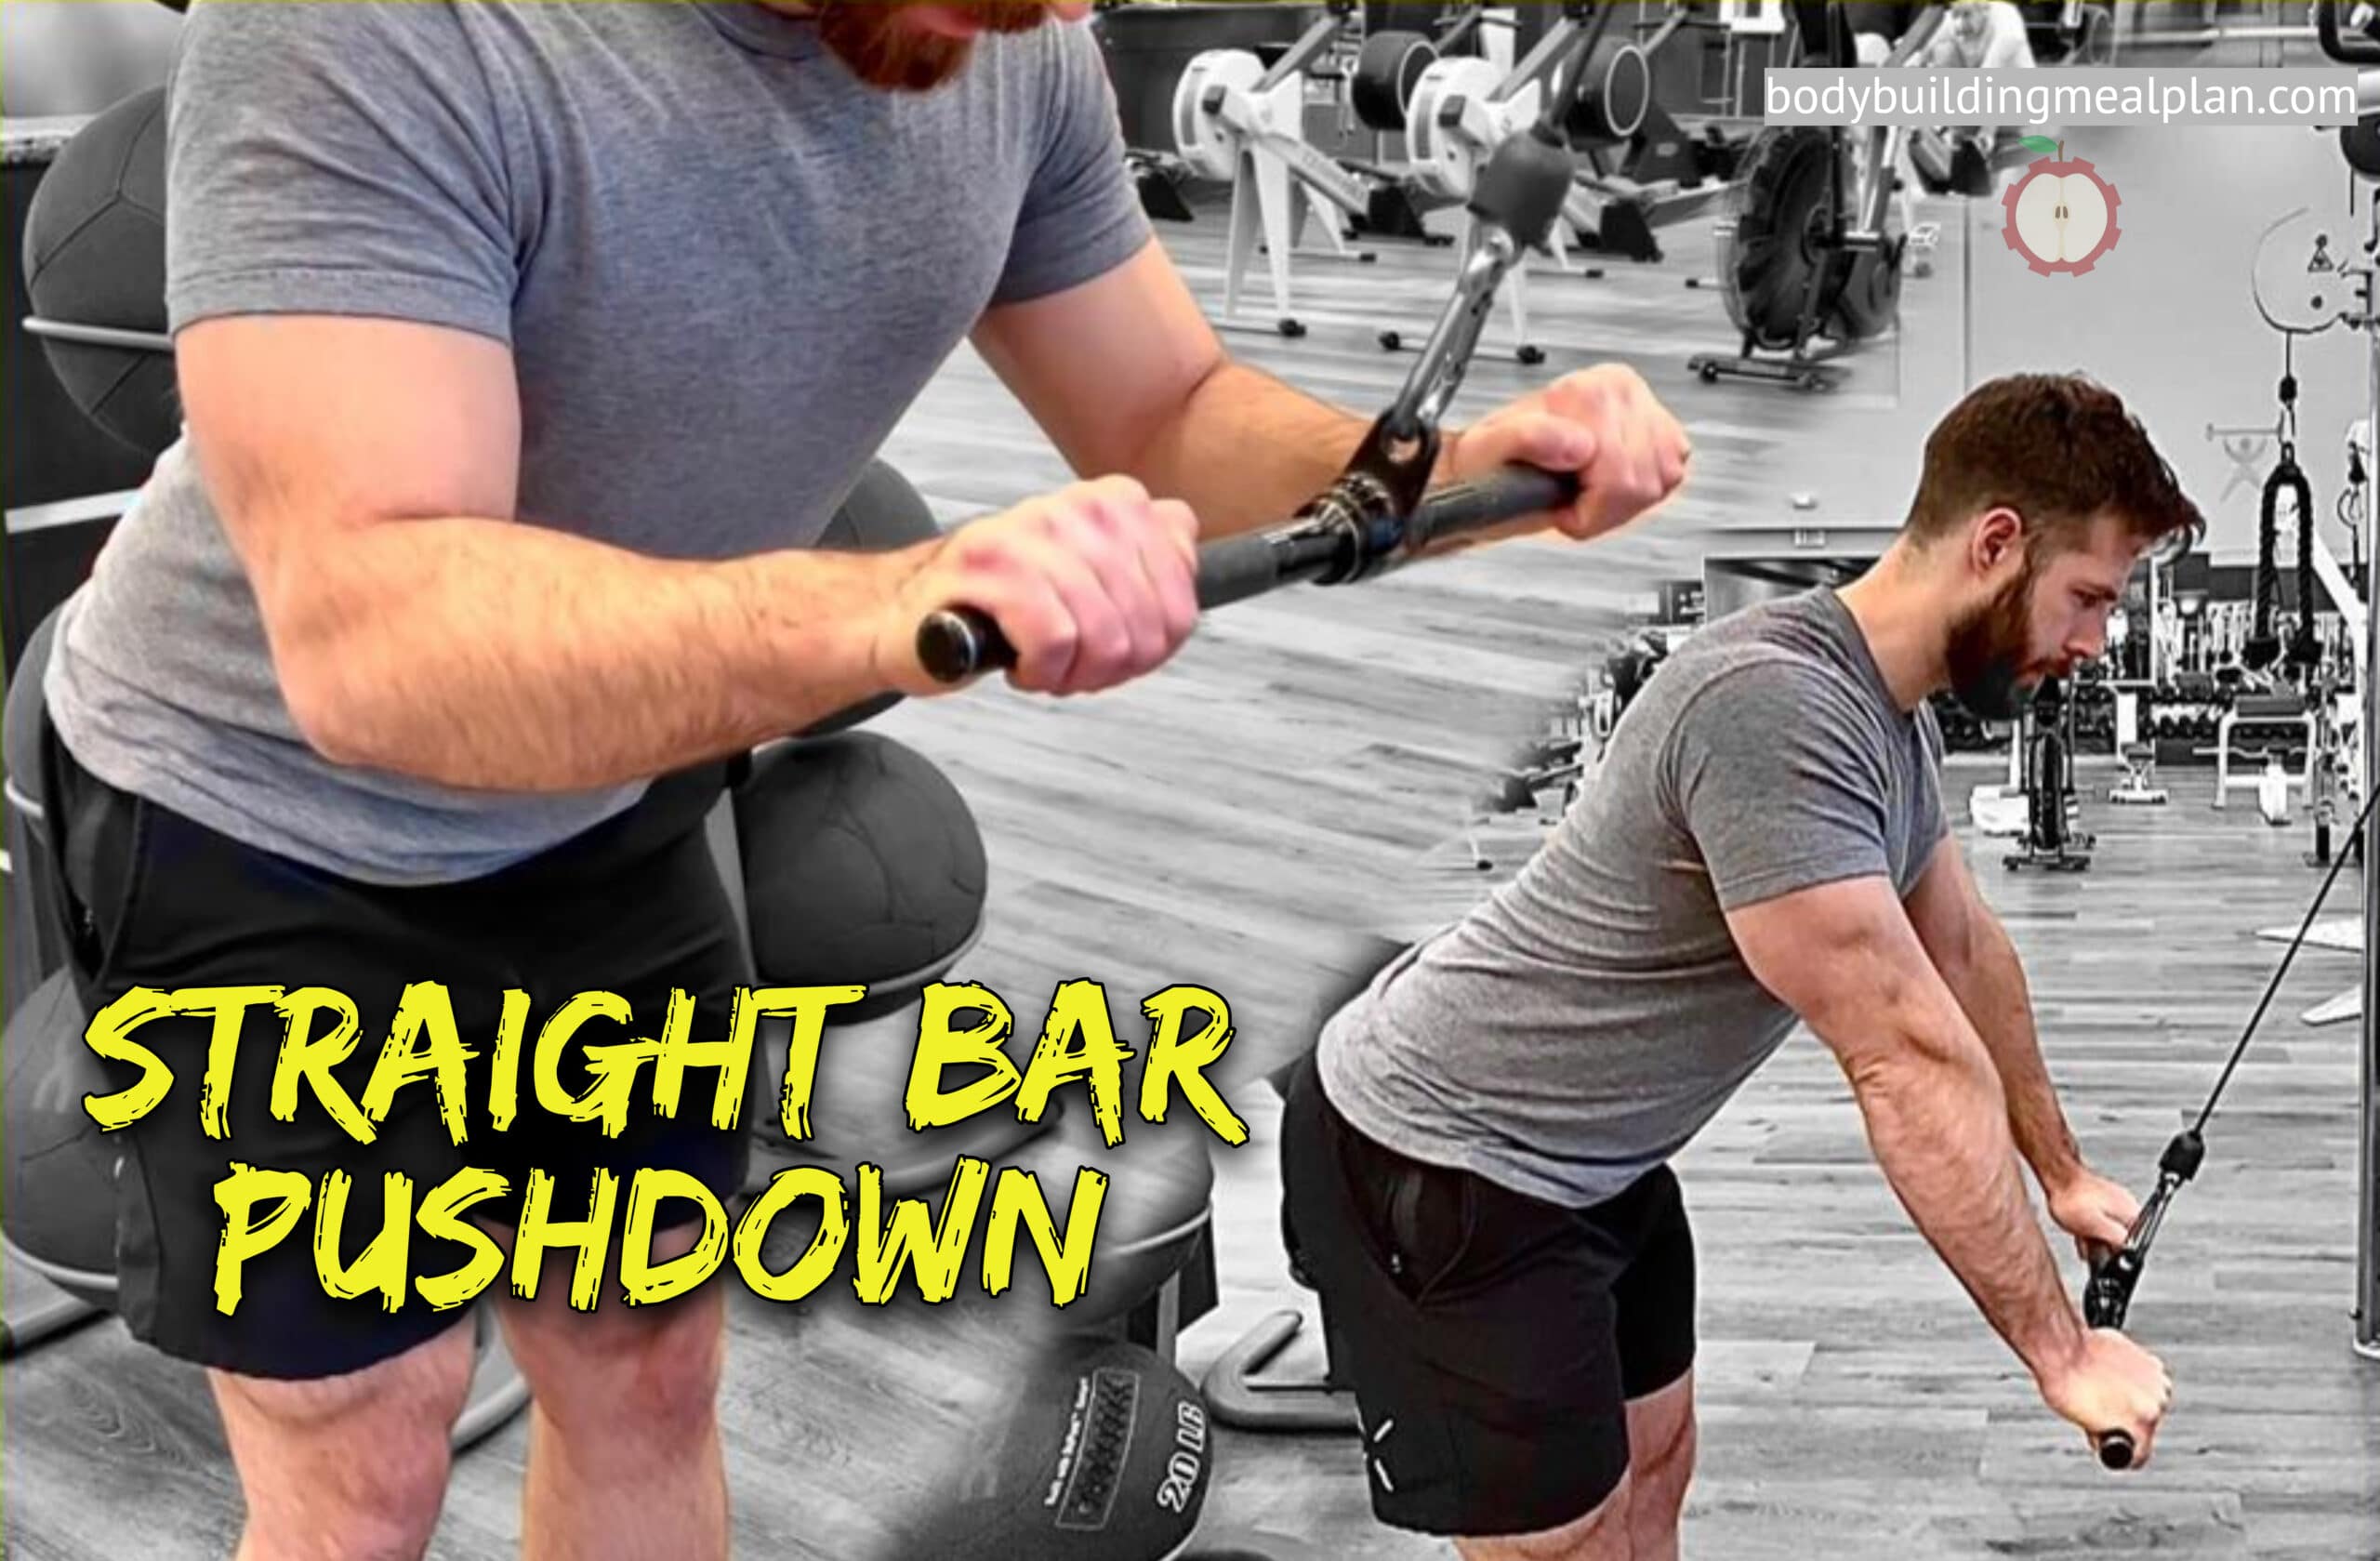 Straight Bar Pushdown (Overhand Grip) Benefits & Form w/ Video